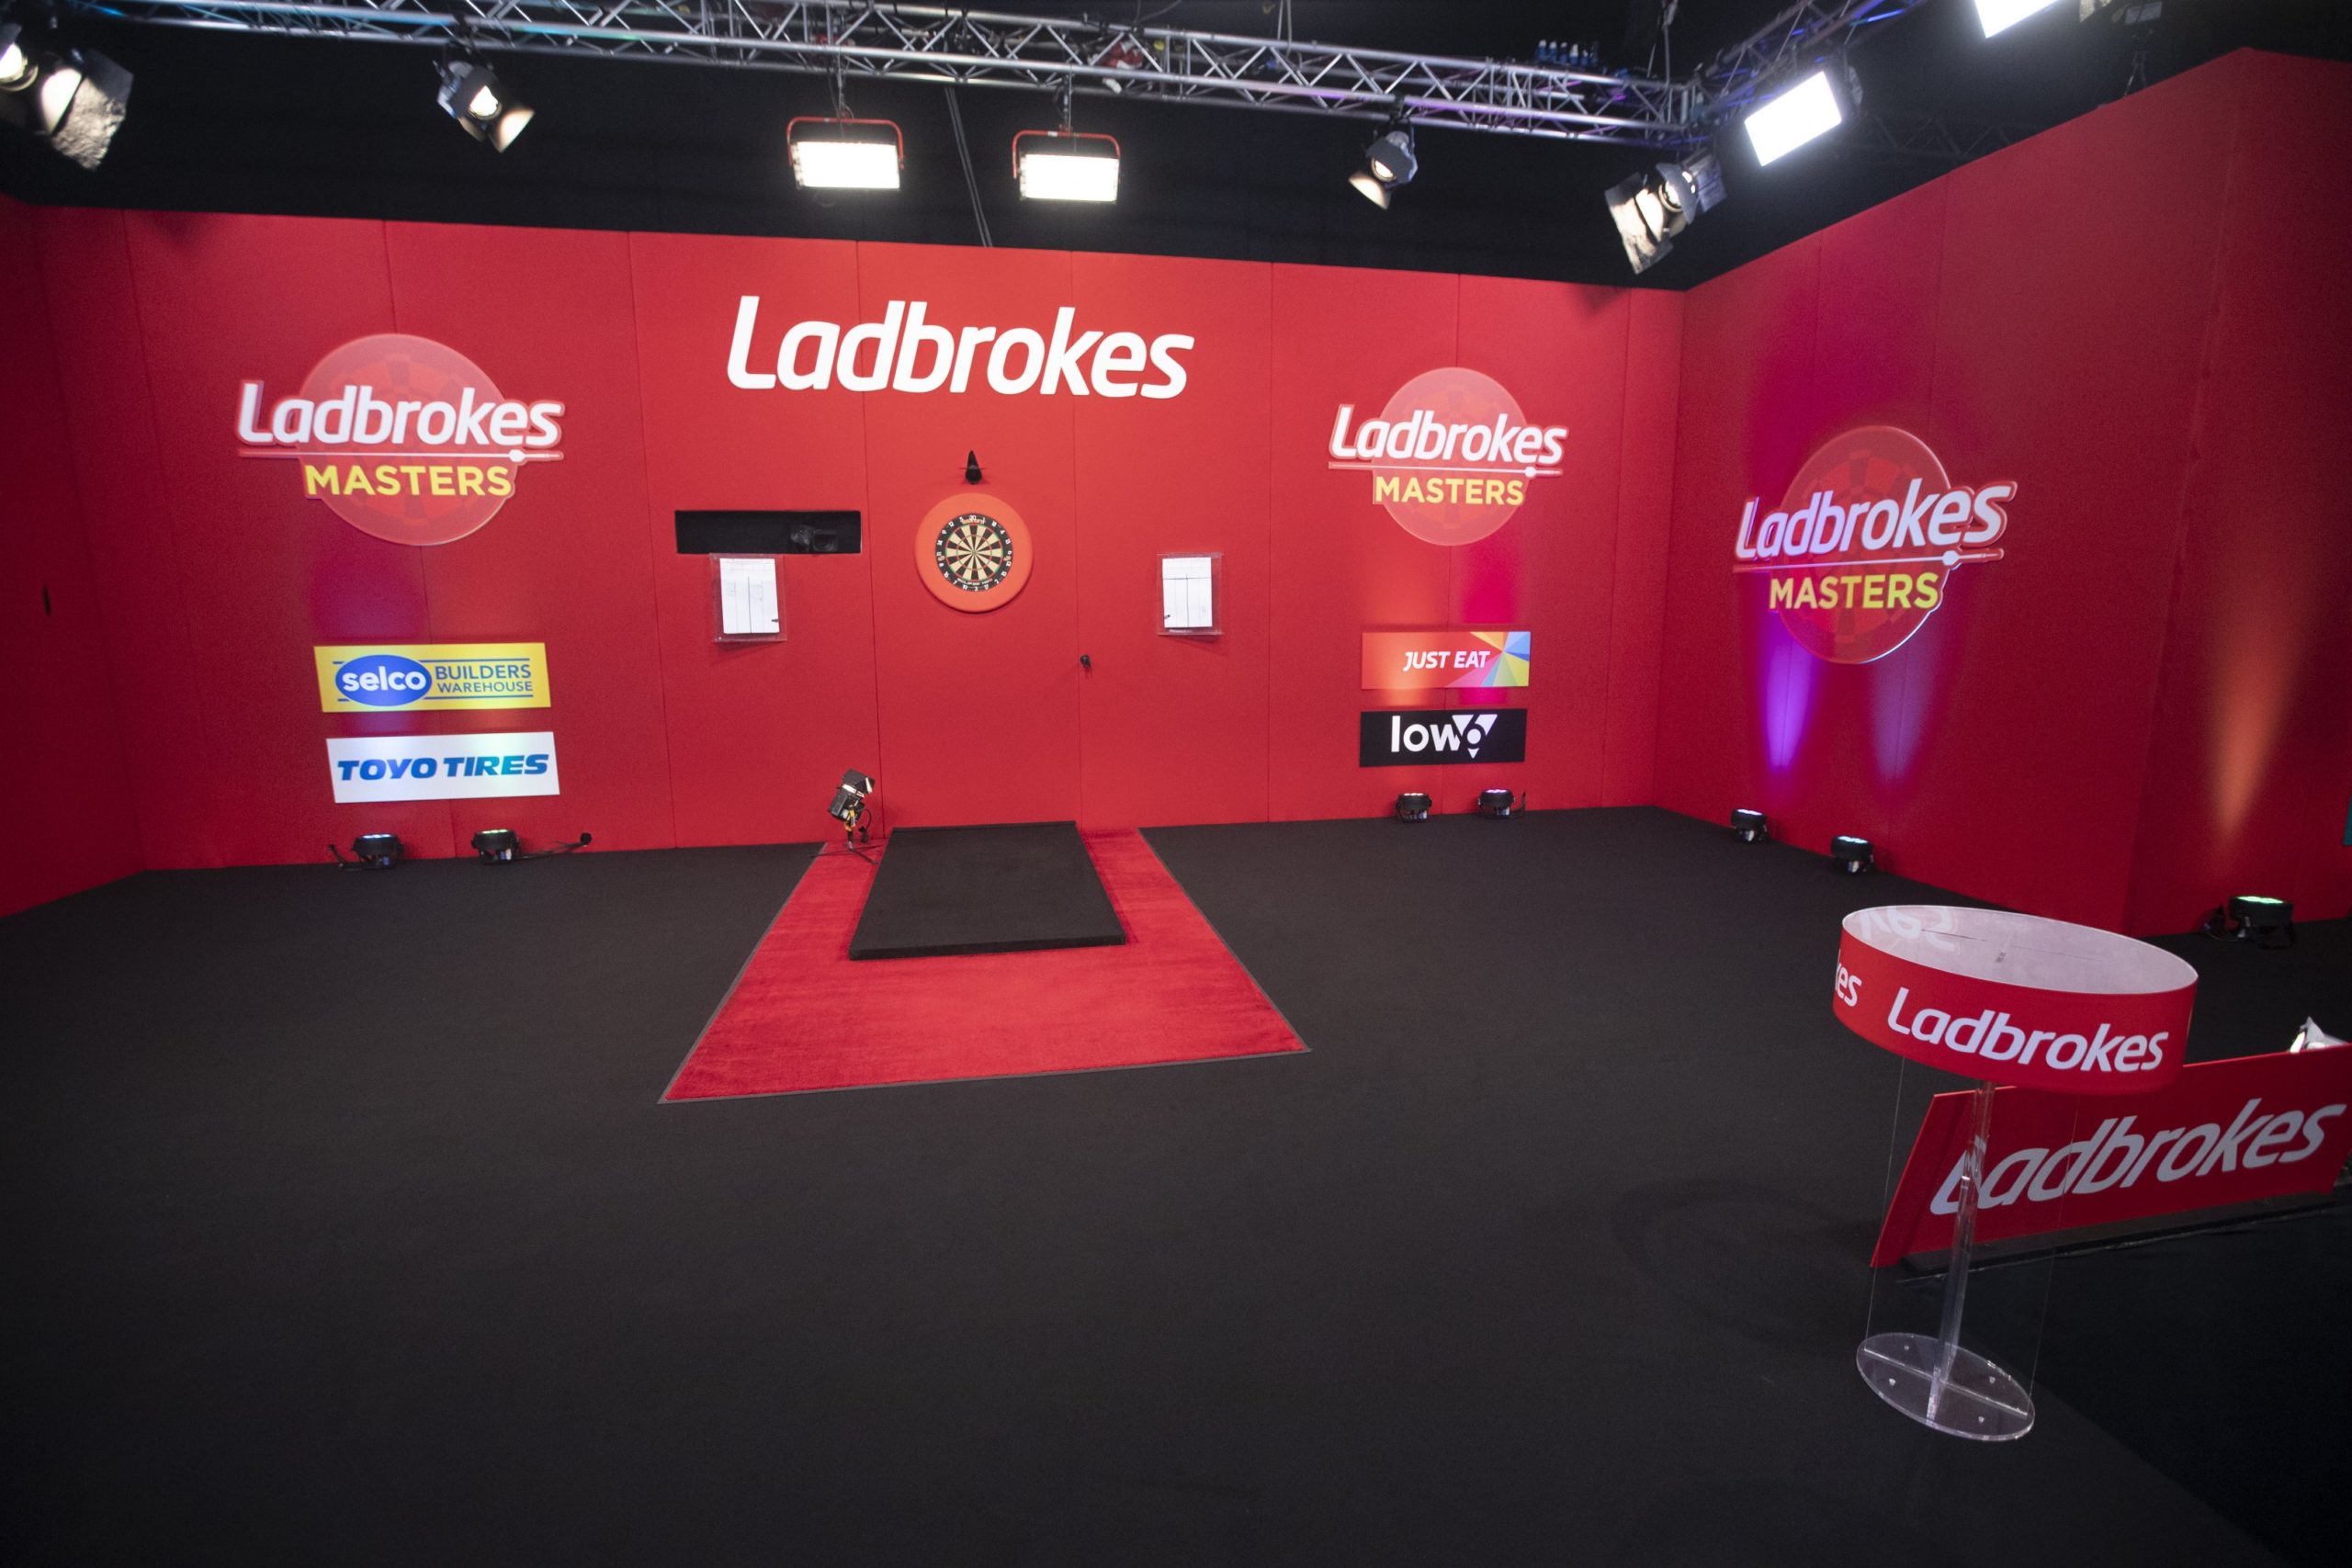 Ladbrokes Masters: Finals Day Live Blog